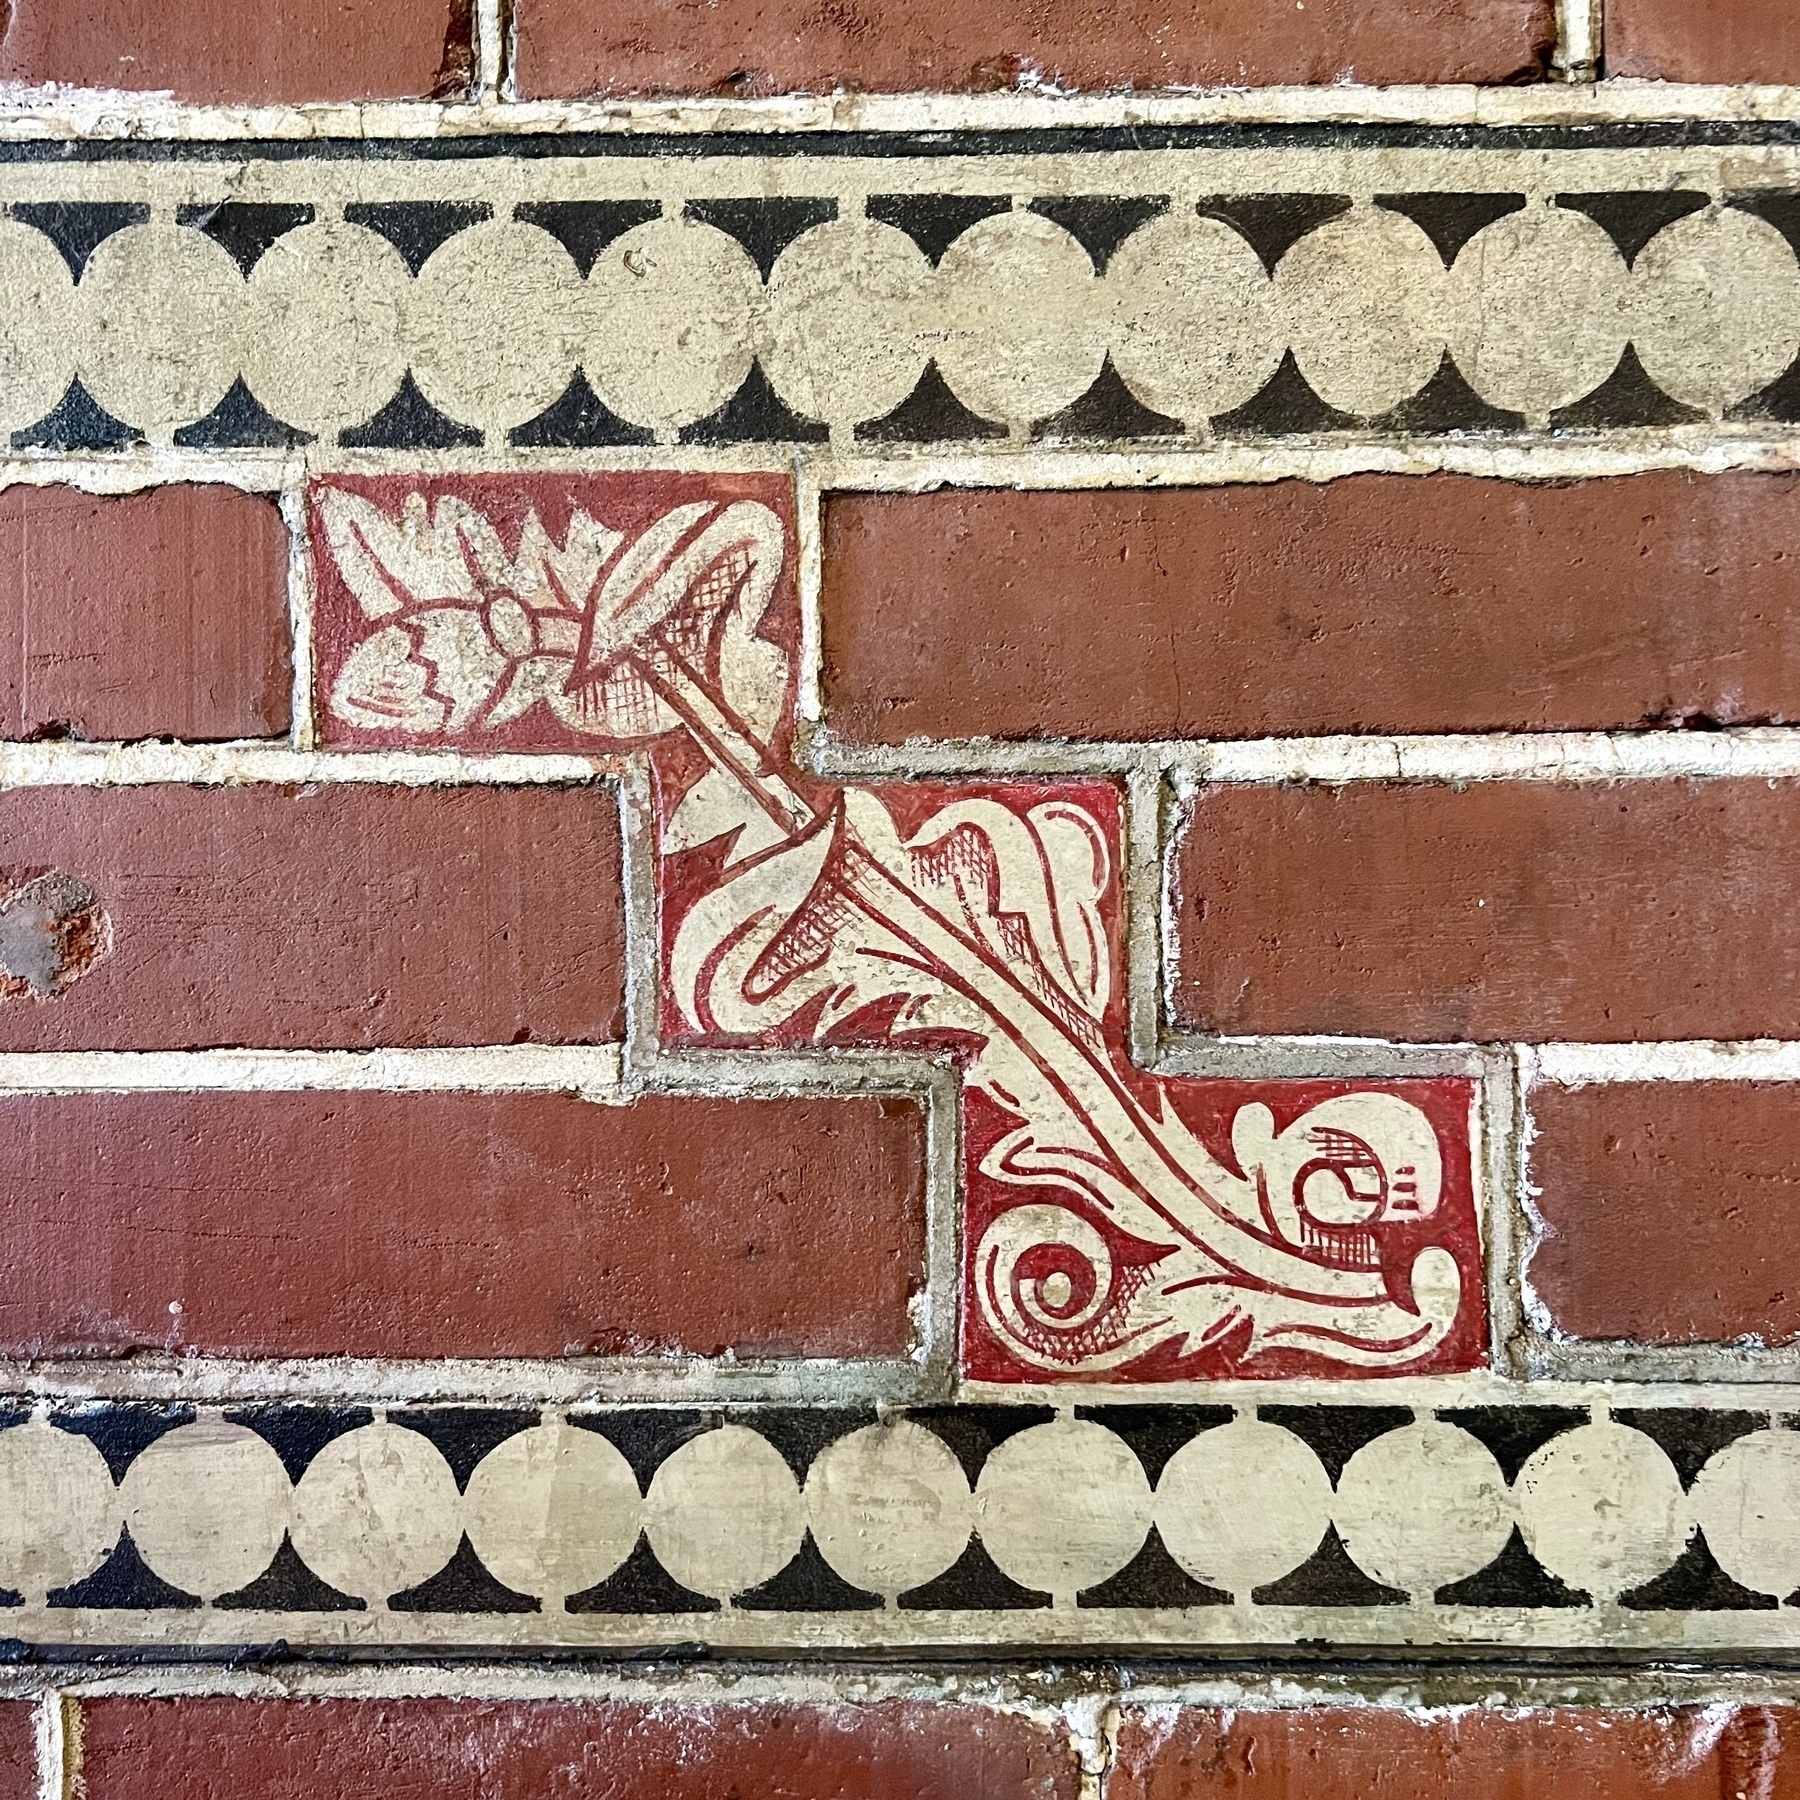 A leafy tile amongst bricks.